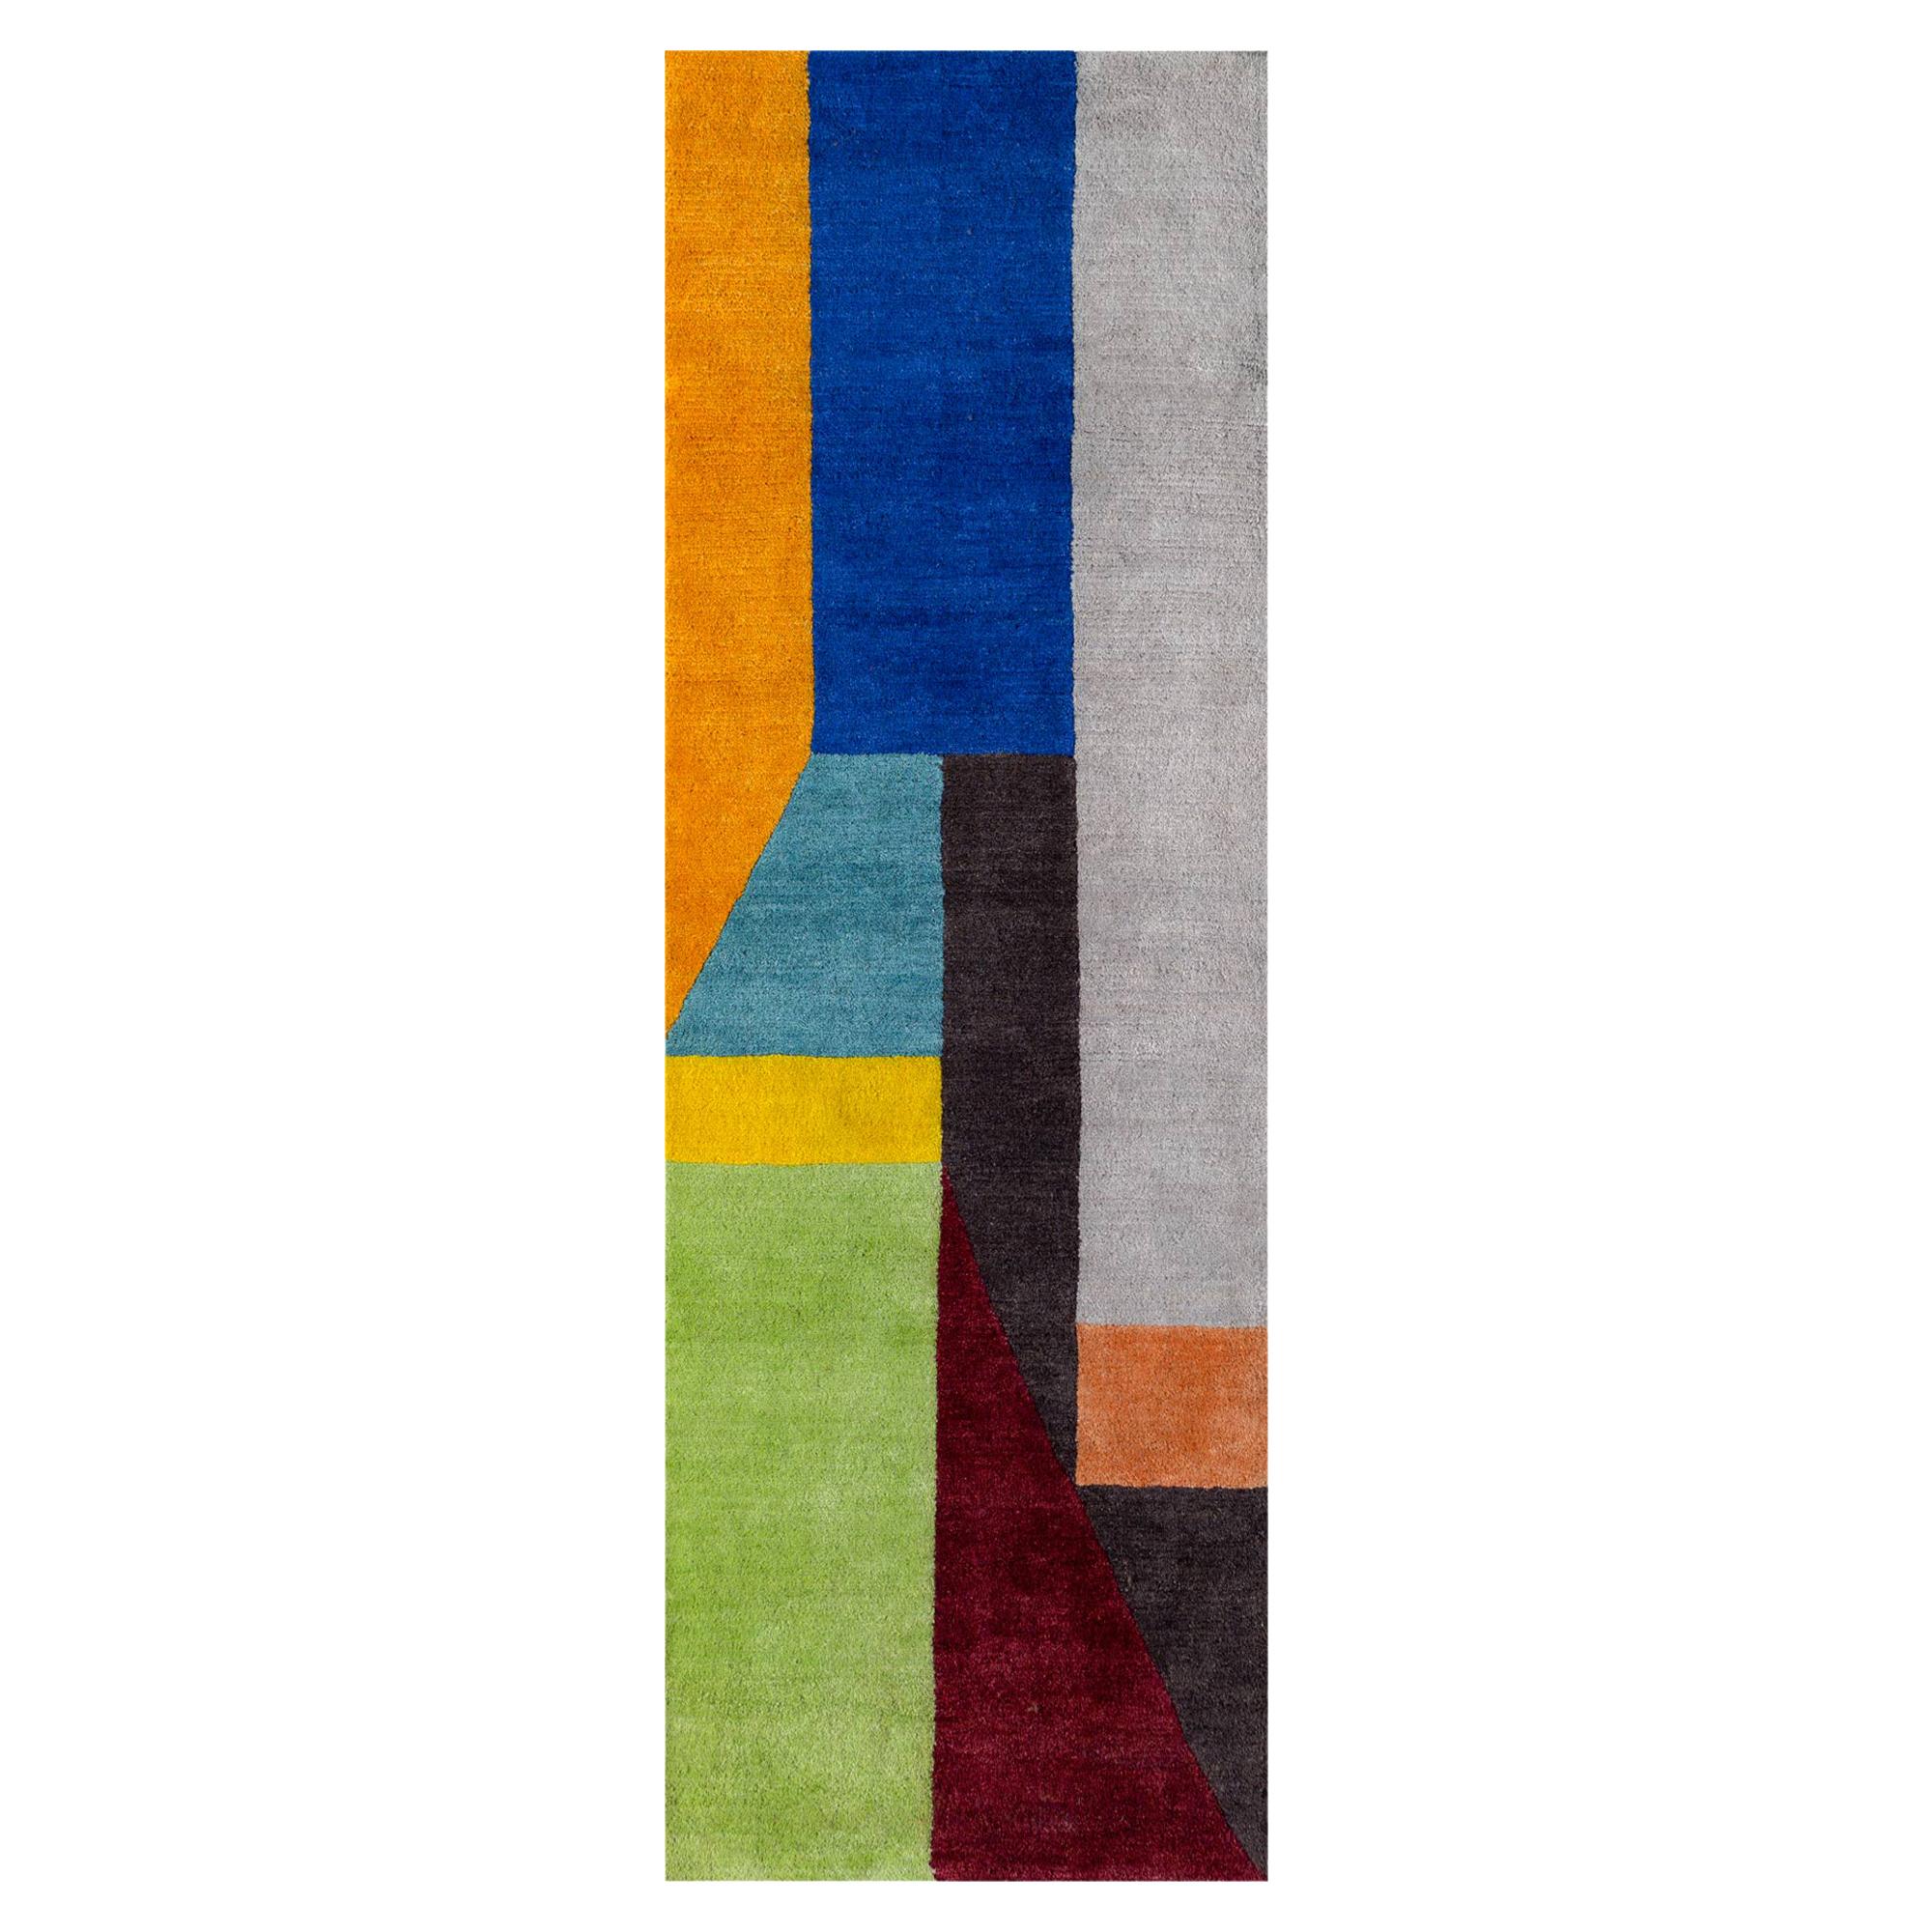 CEM1 Woollen Carpet by Chung Eun Mo for Post Design Collection/Memphis